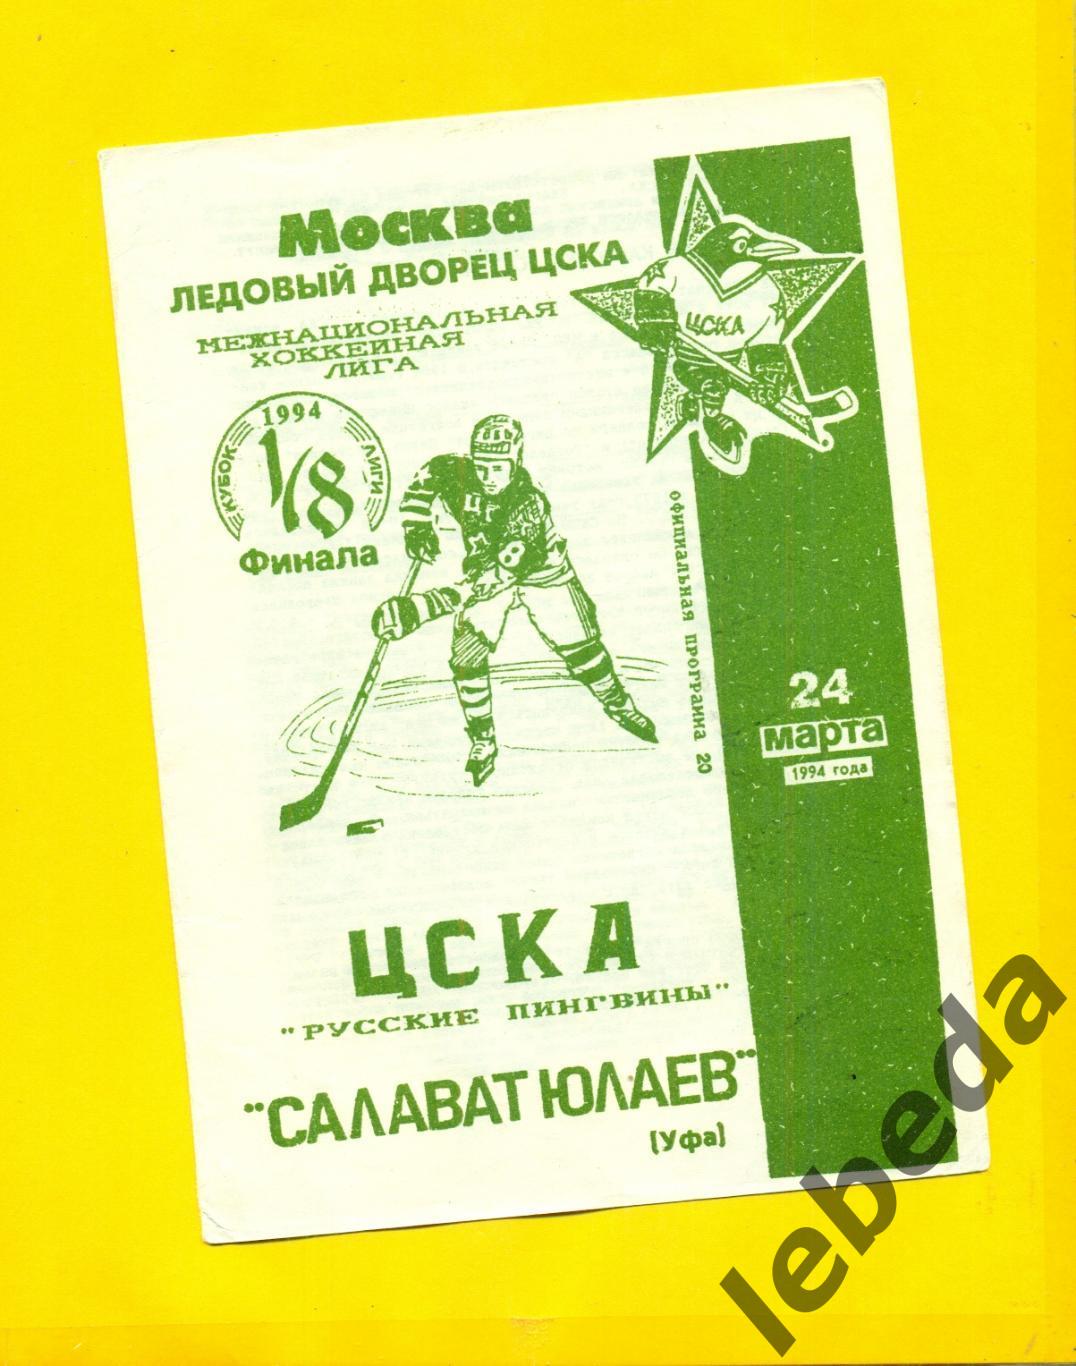 ЦСКА - Салават Юлаев уфа - 1993 / 1994 г. ( 24.03.94.) 1/8 финала.